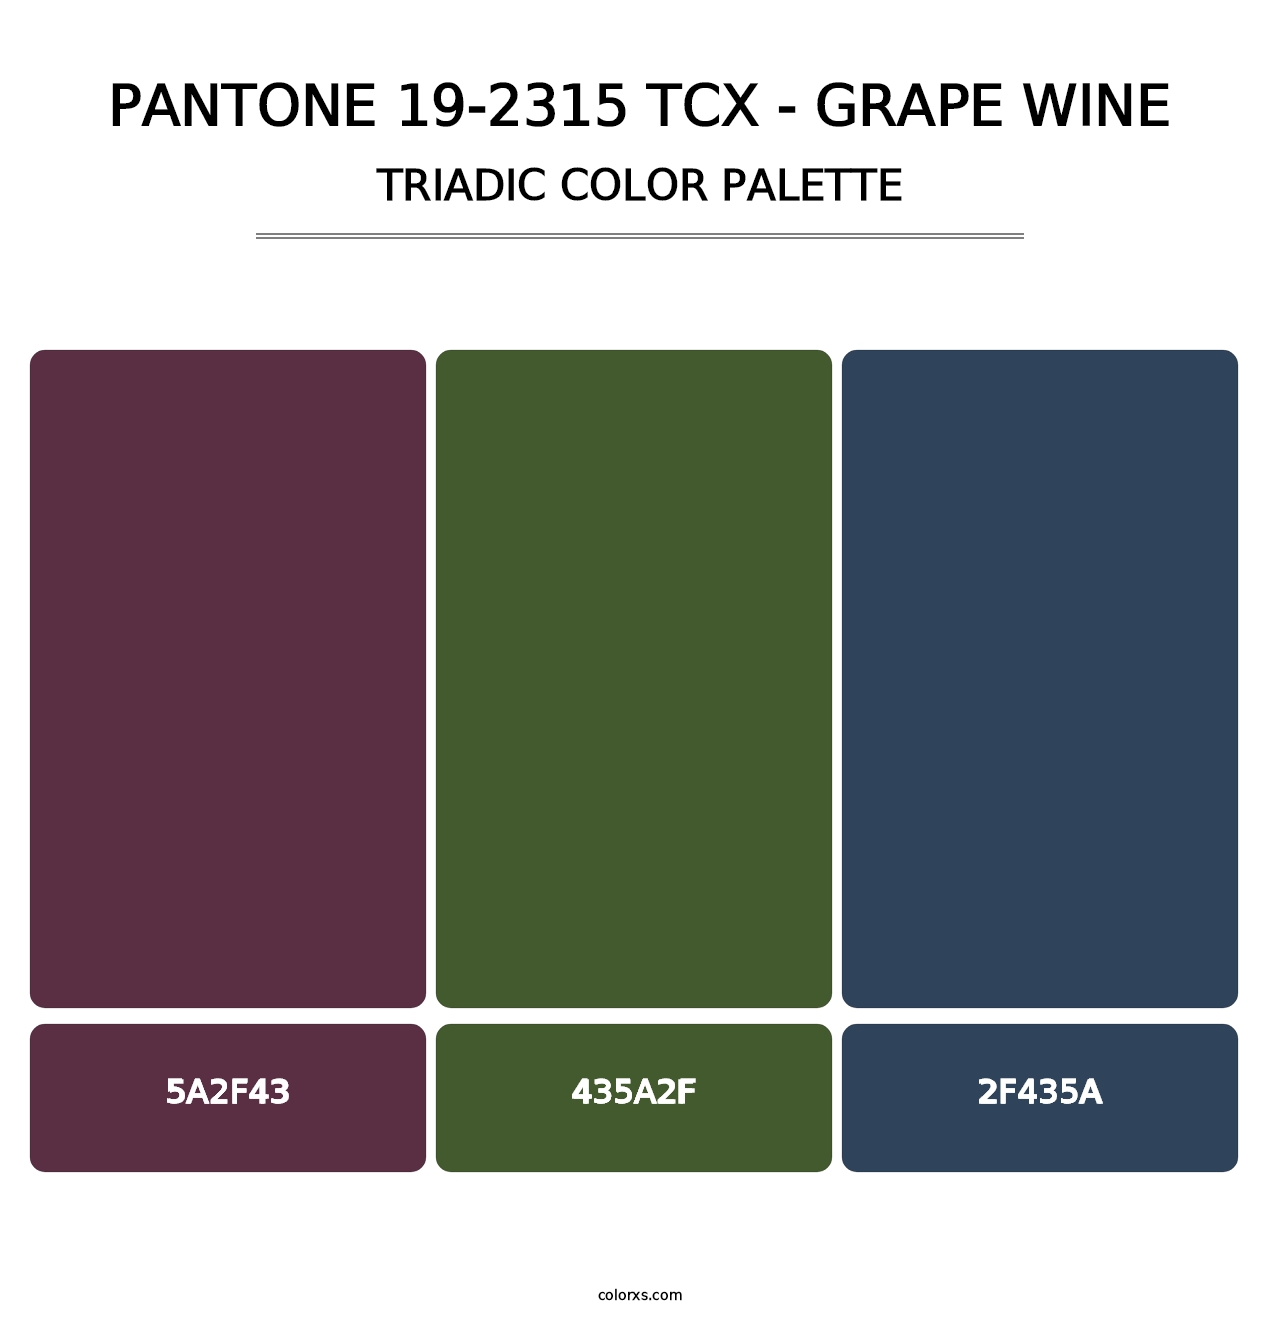 PANTONE 19-2315 TCX - Grape Wine - Triadic Color Palette